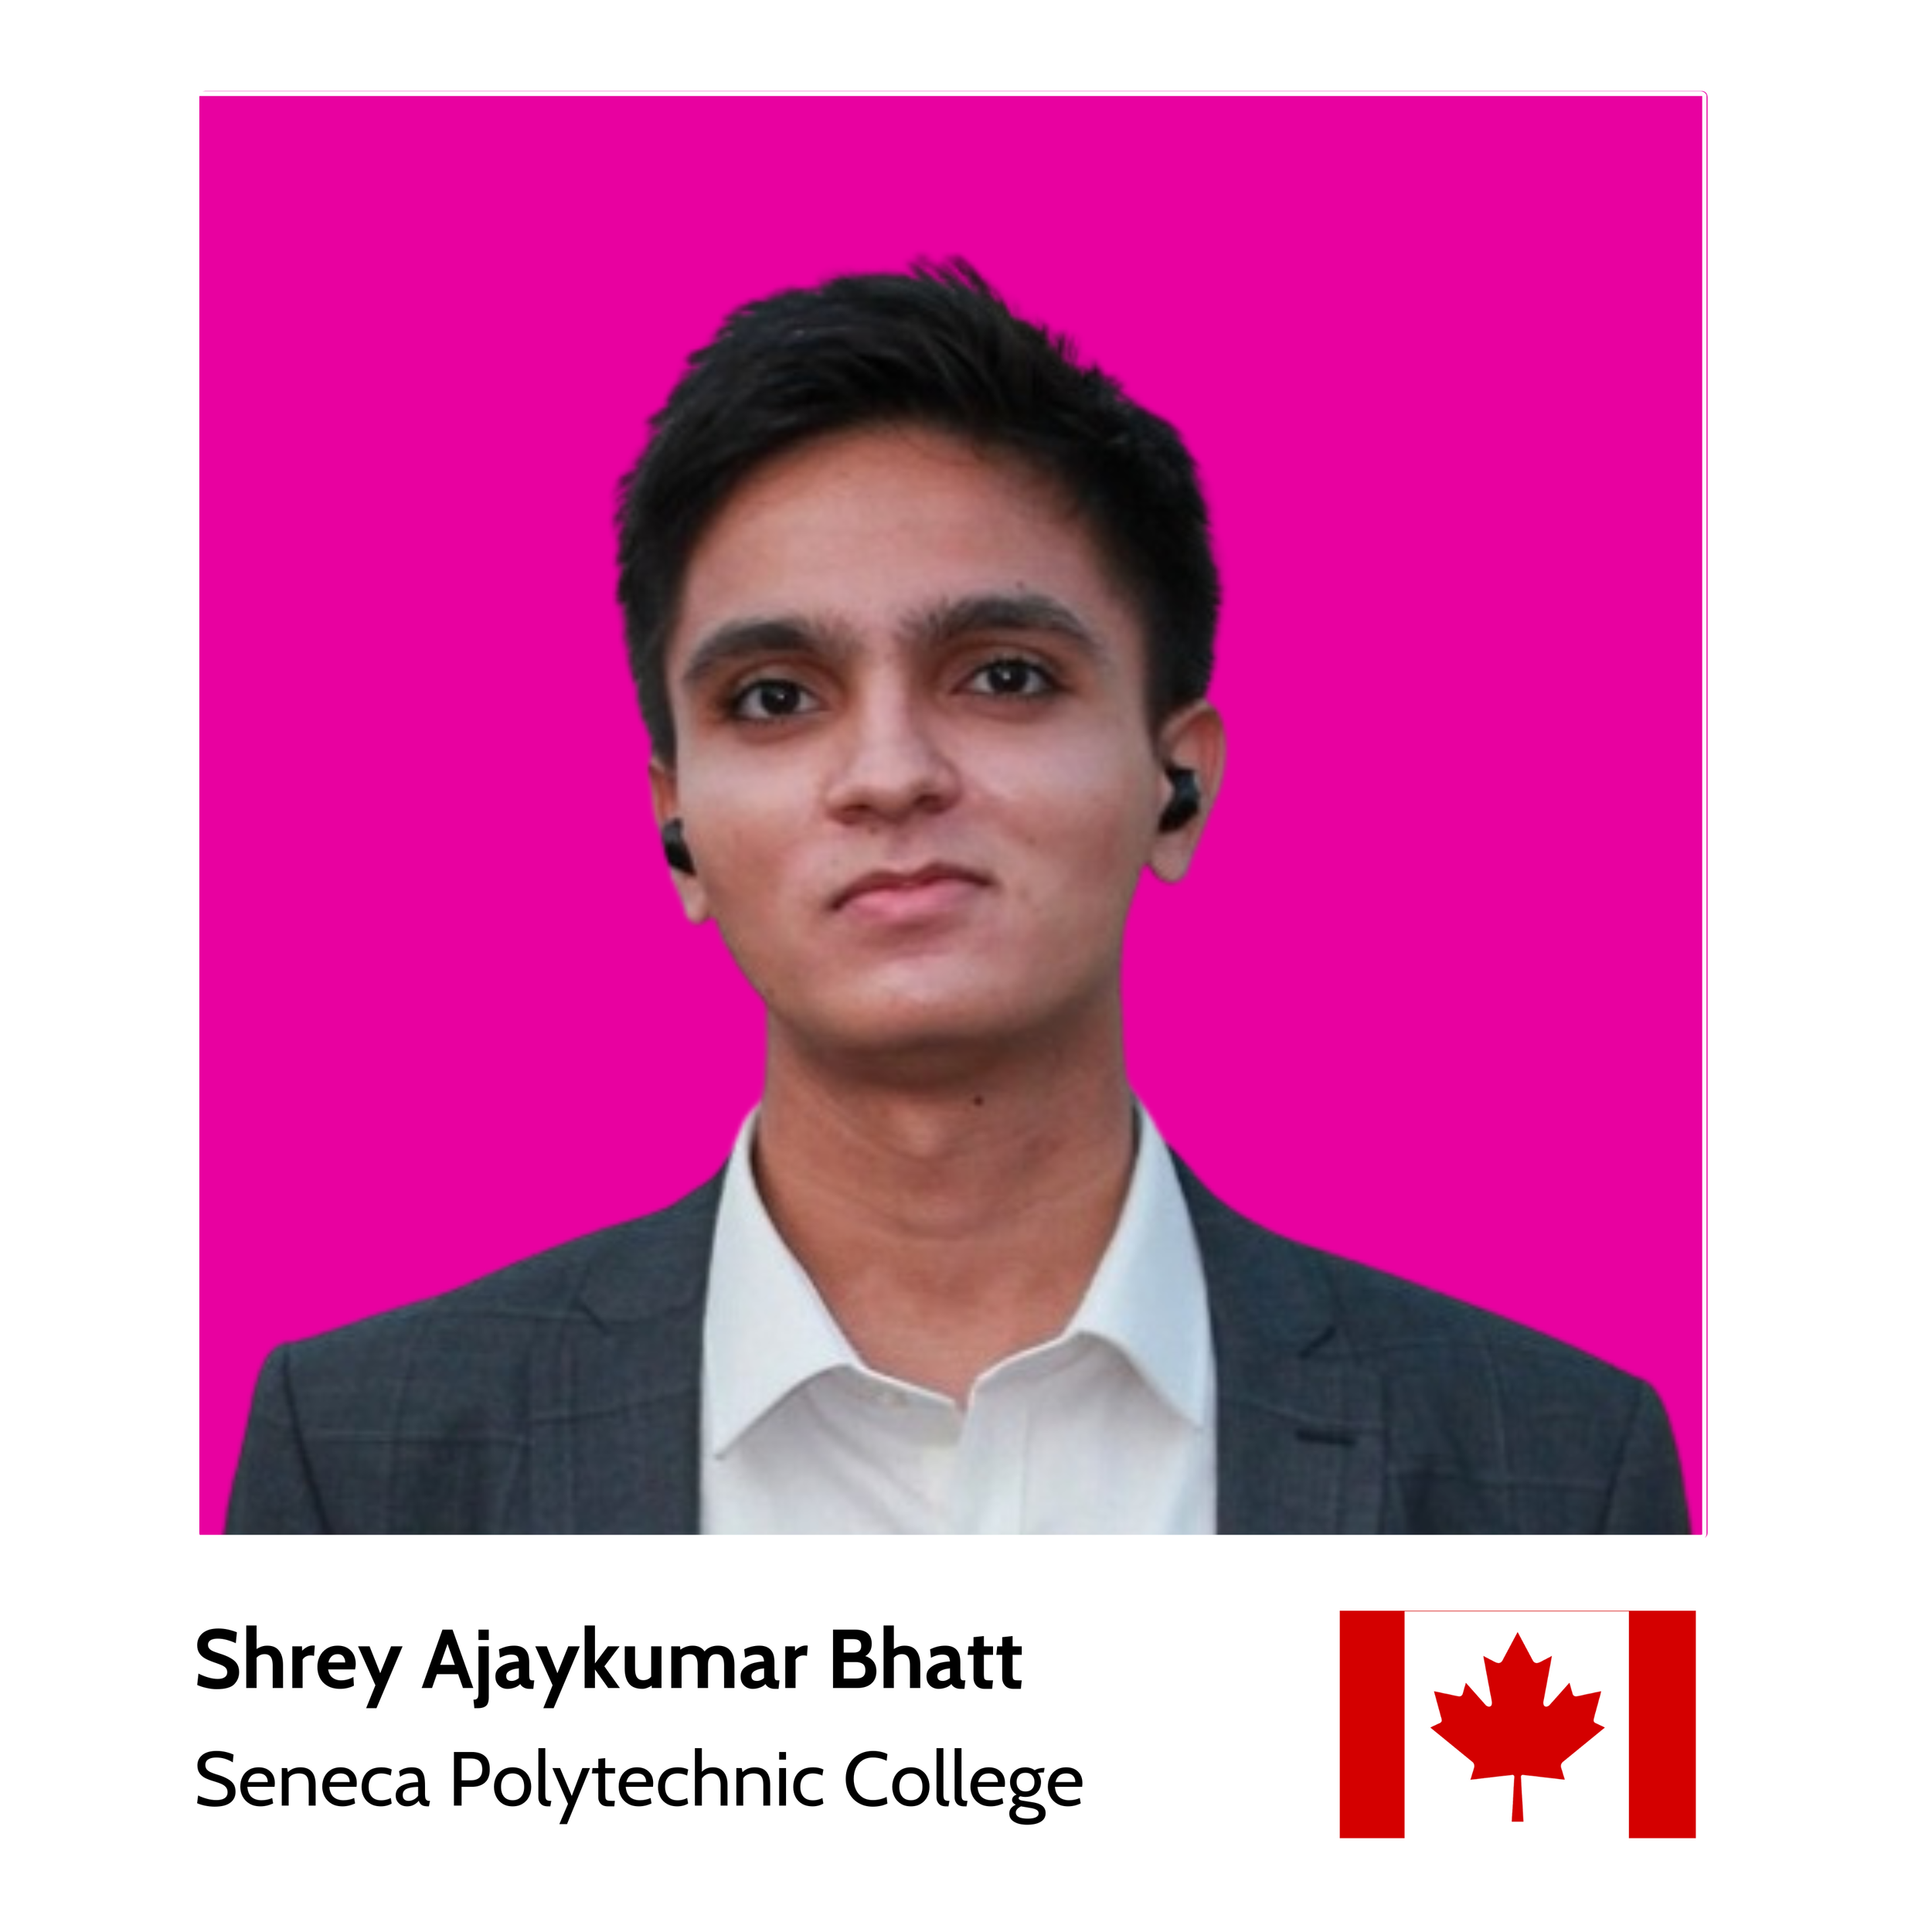 Your_Big_Year_ibm_z_student_ambassador_Shrey_Ajaykumar_Bhatt_Seneca_Polytechnic_College.png